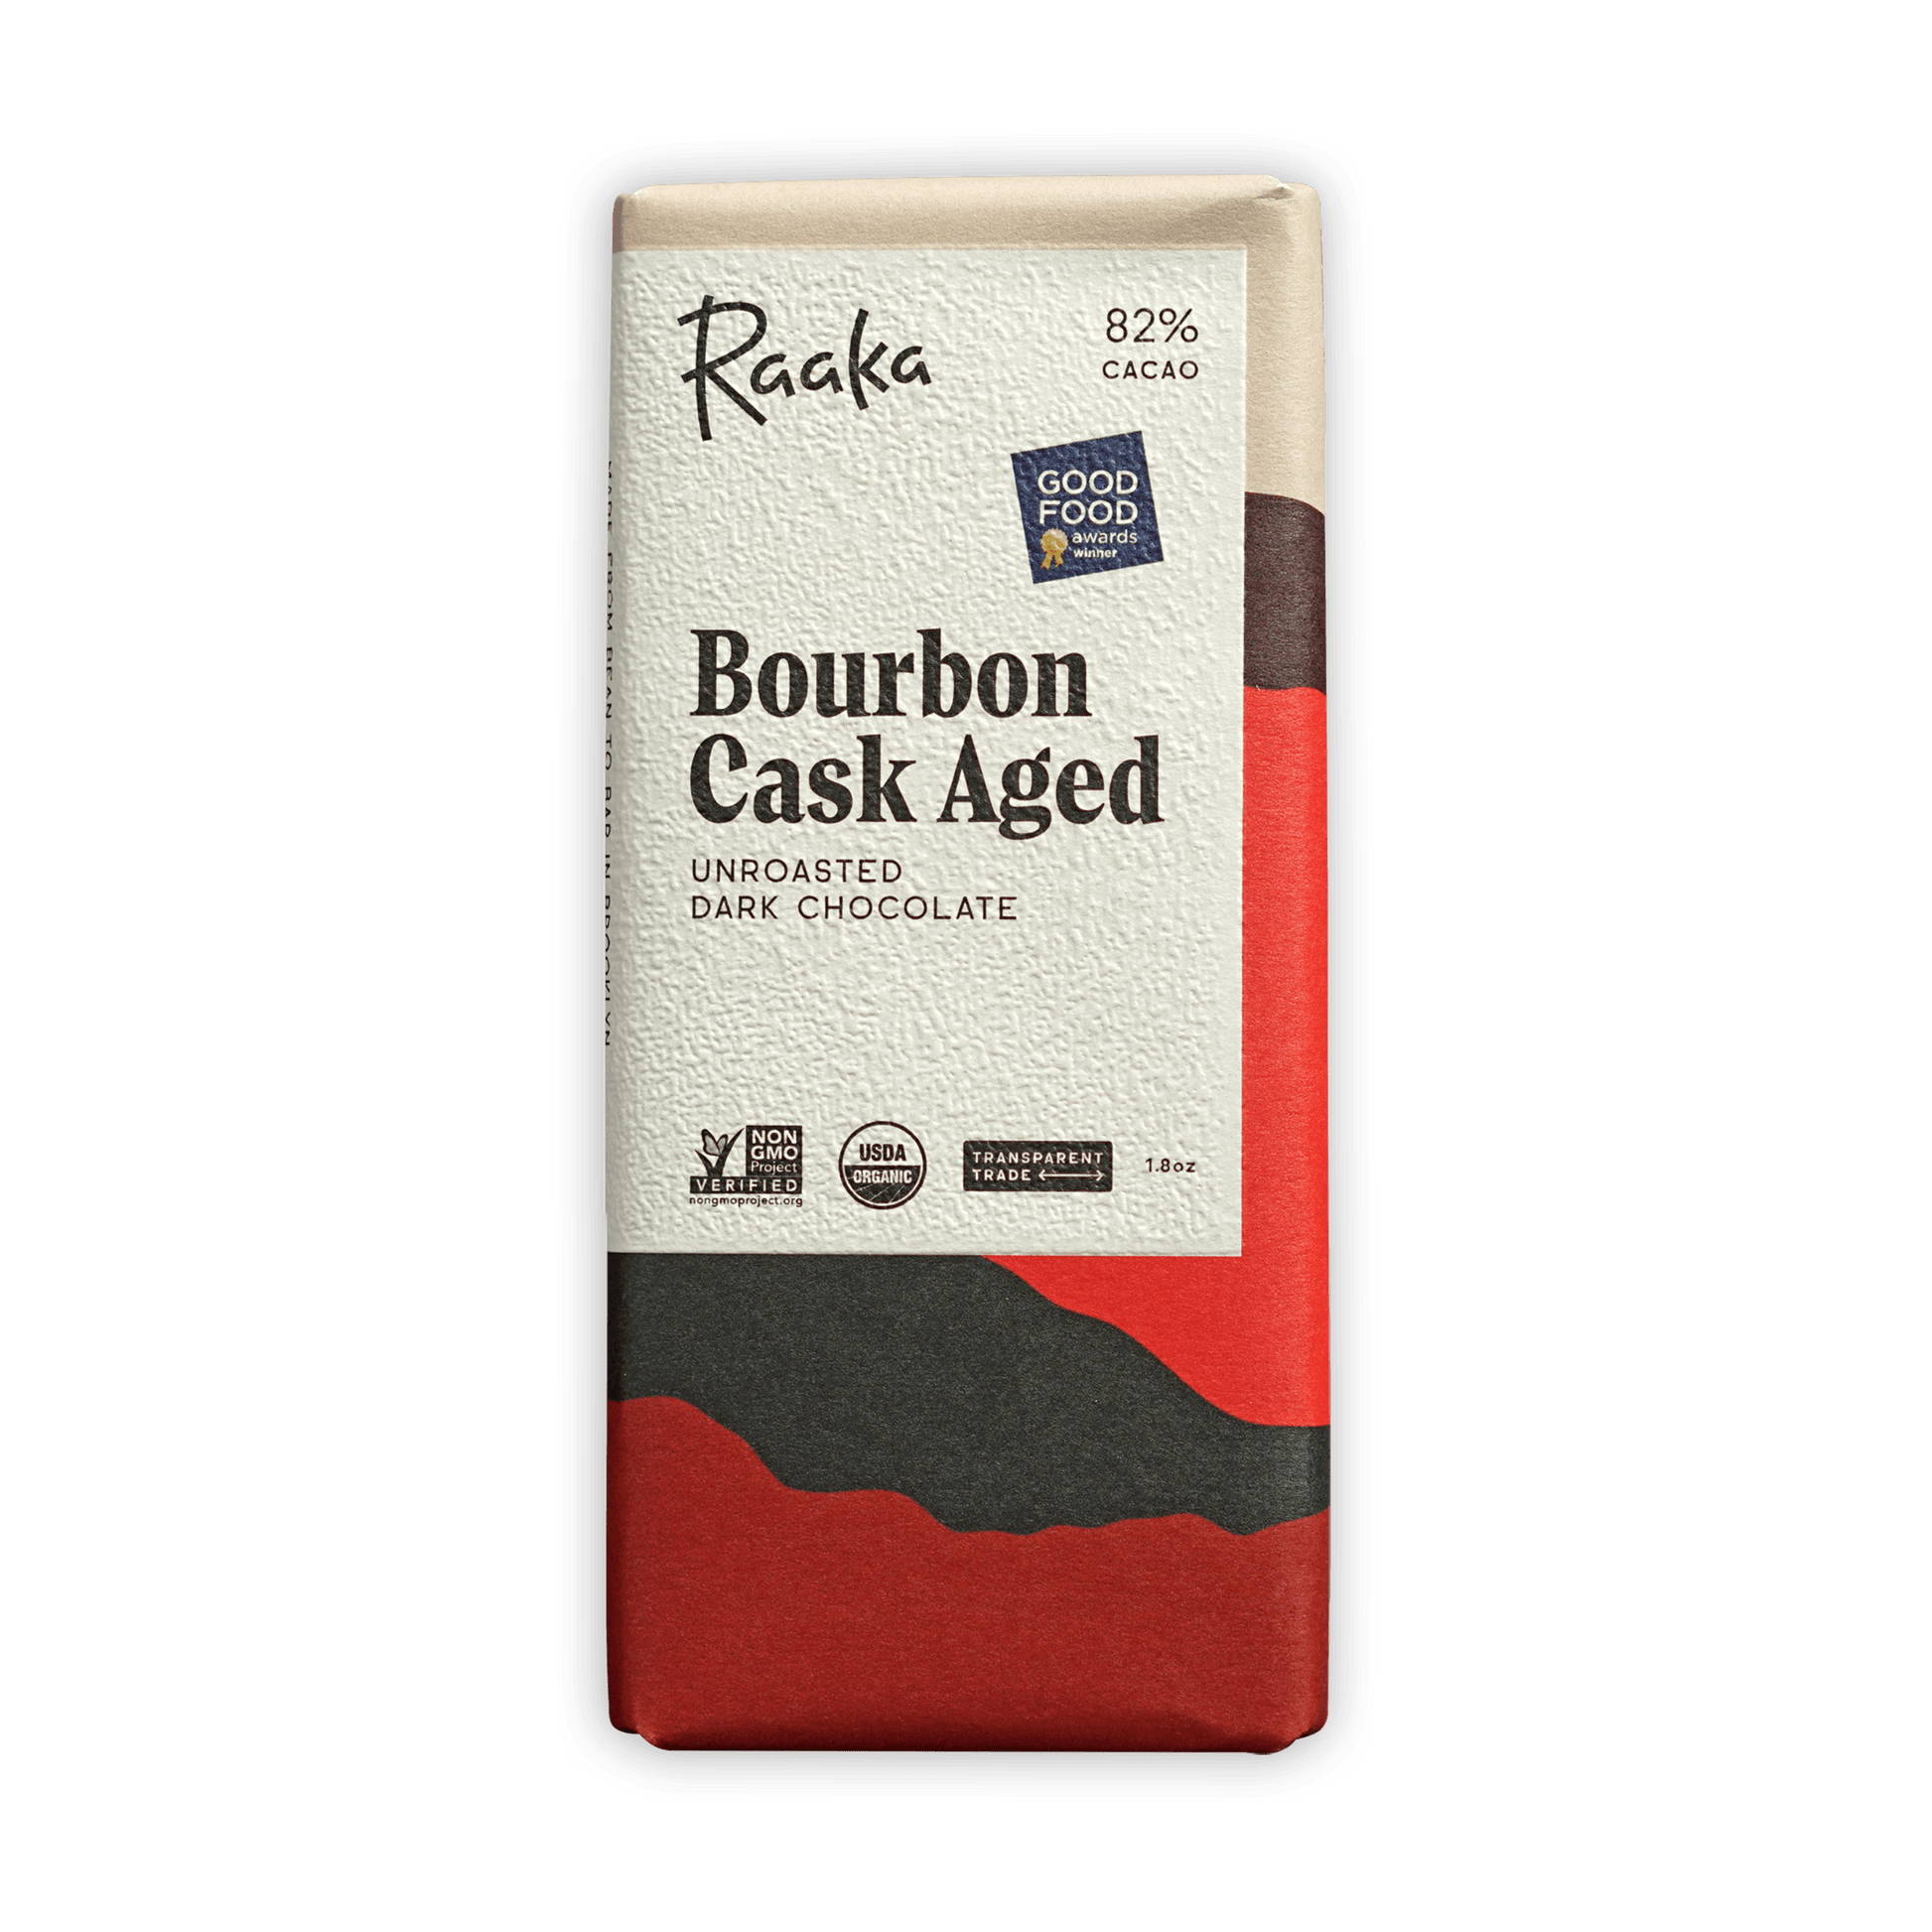 Raaka Bourbon Cask Aged 82%